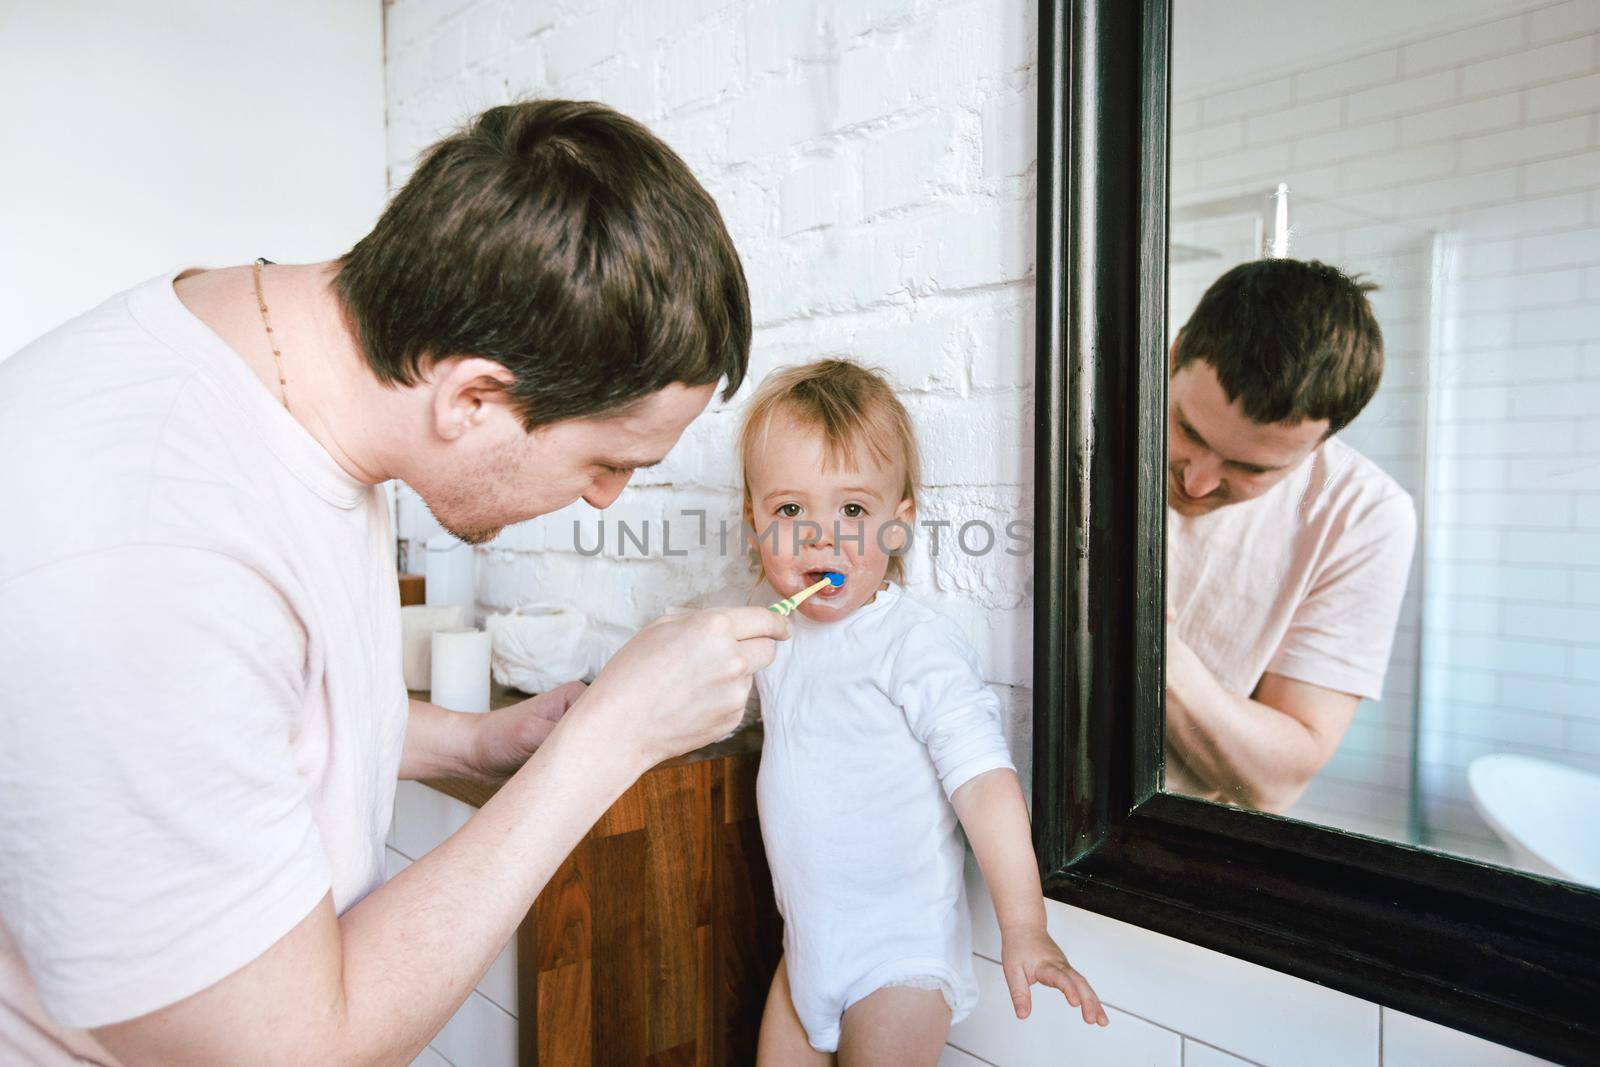 Man brushing teeth of adorable baby by Demkat